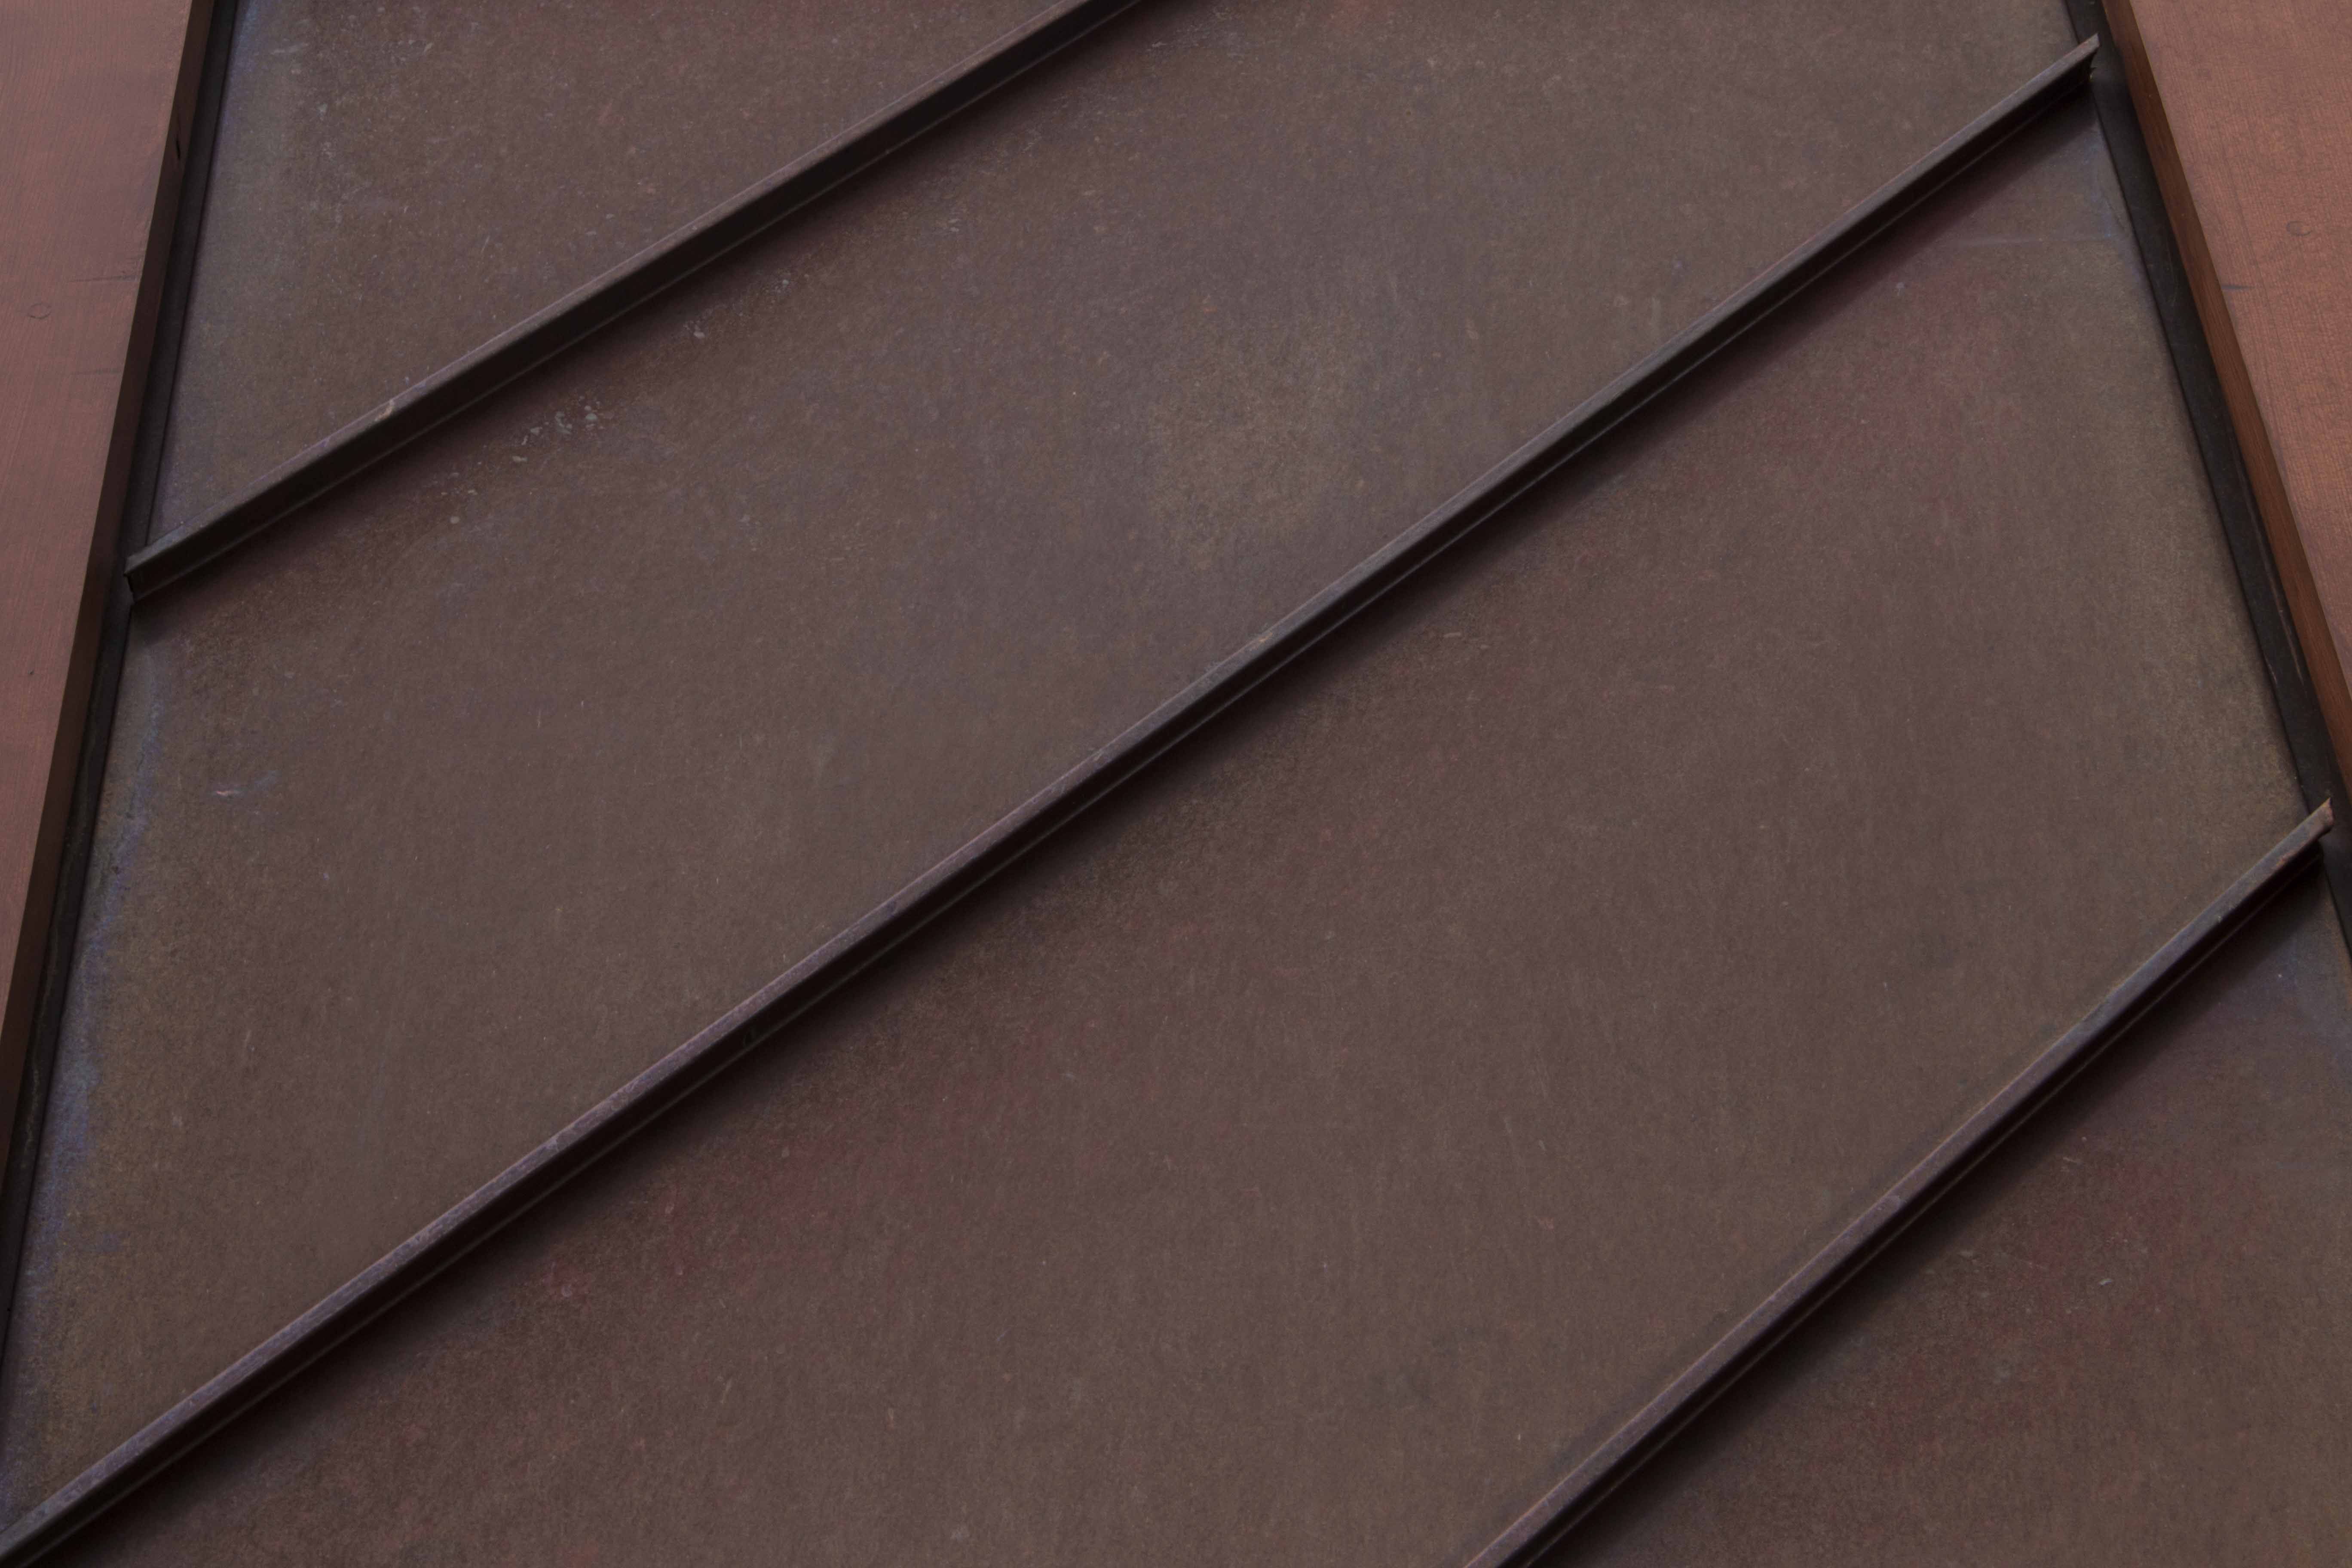 Natural copper cladding in a standing seam profile.